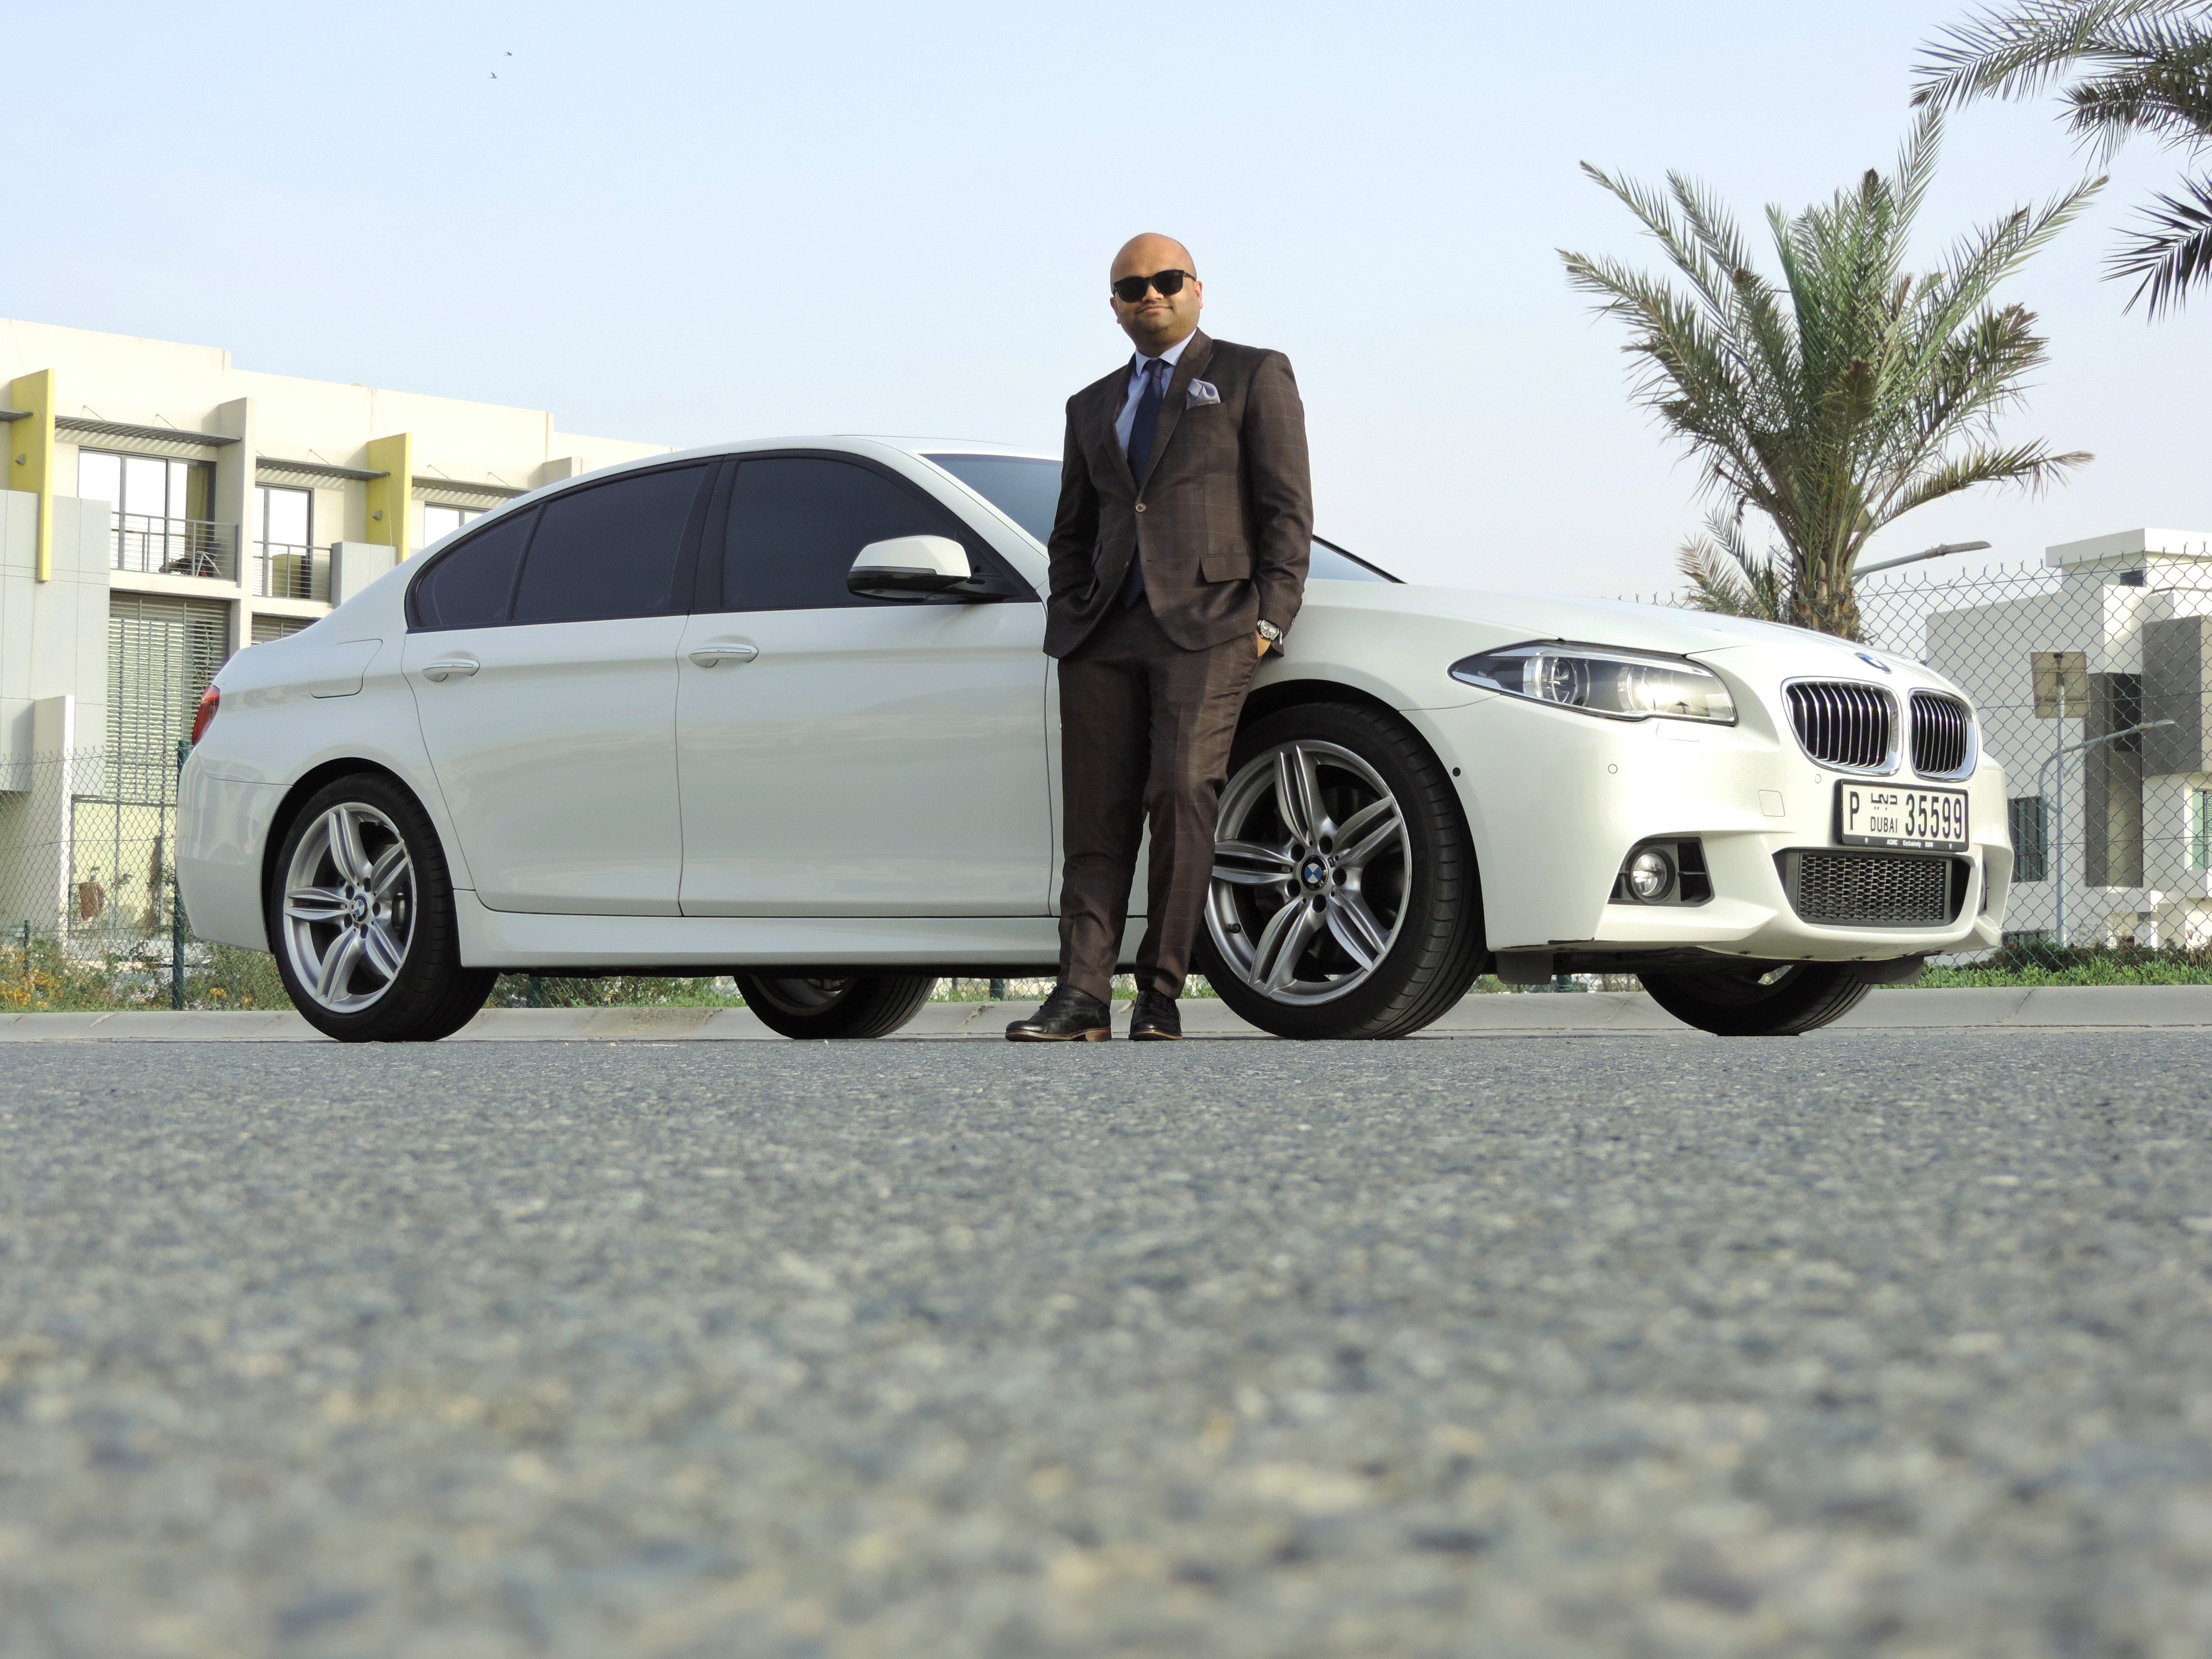 Behind The Wheel - Zeeshan Haris & His BMW 535i